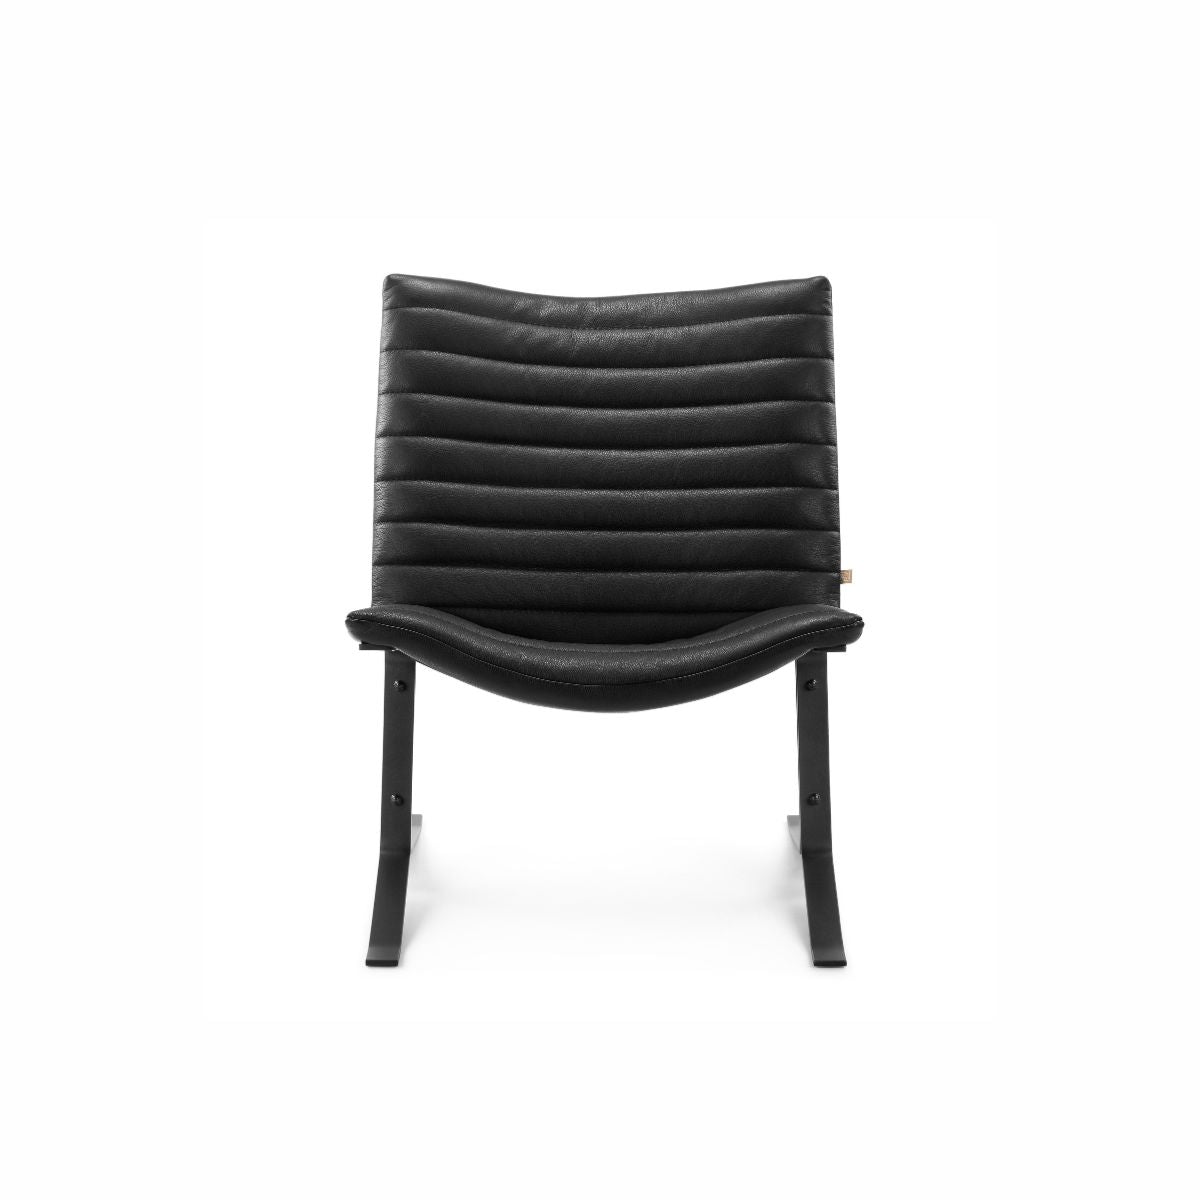 Eagle Chair KEBE / イーグルチェア ケベ 正規品